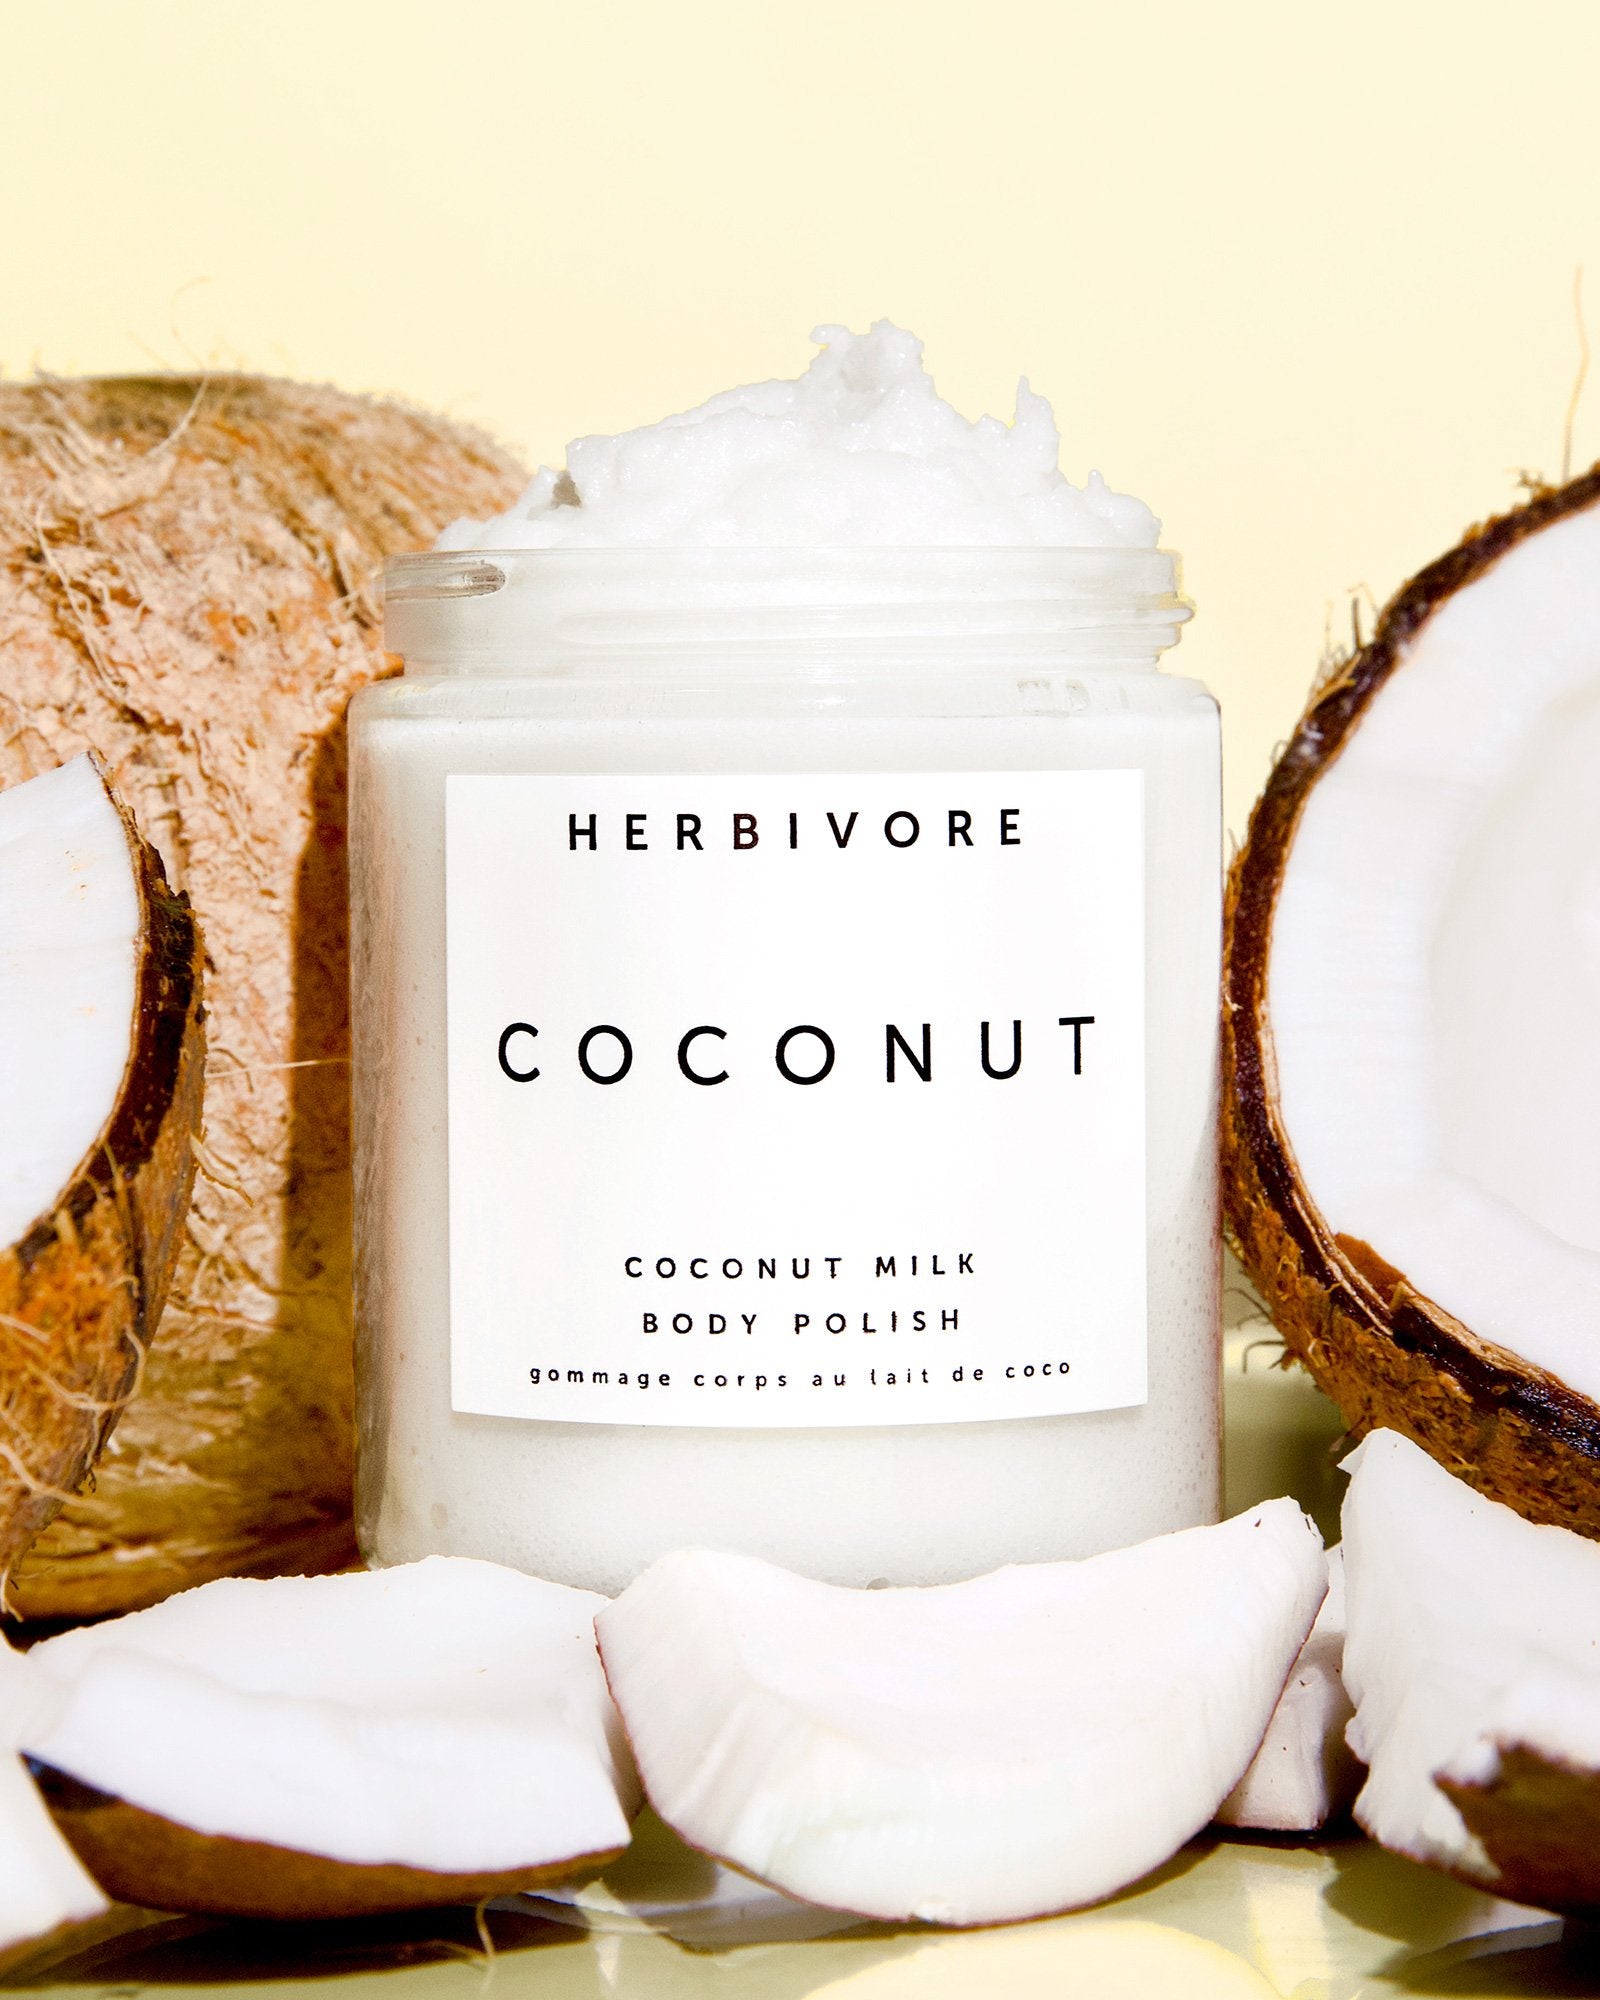 Coconut Milk Body Polish by Herbivore